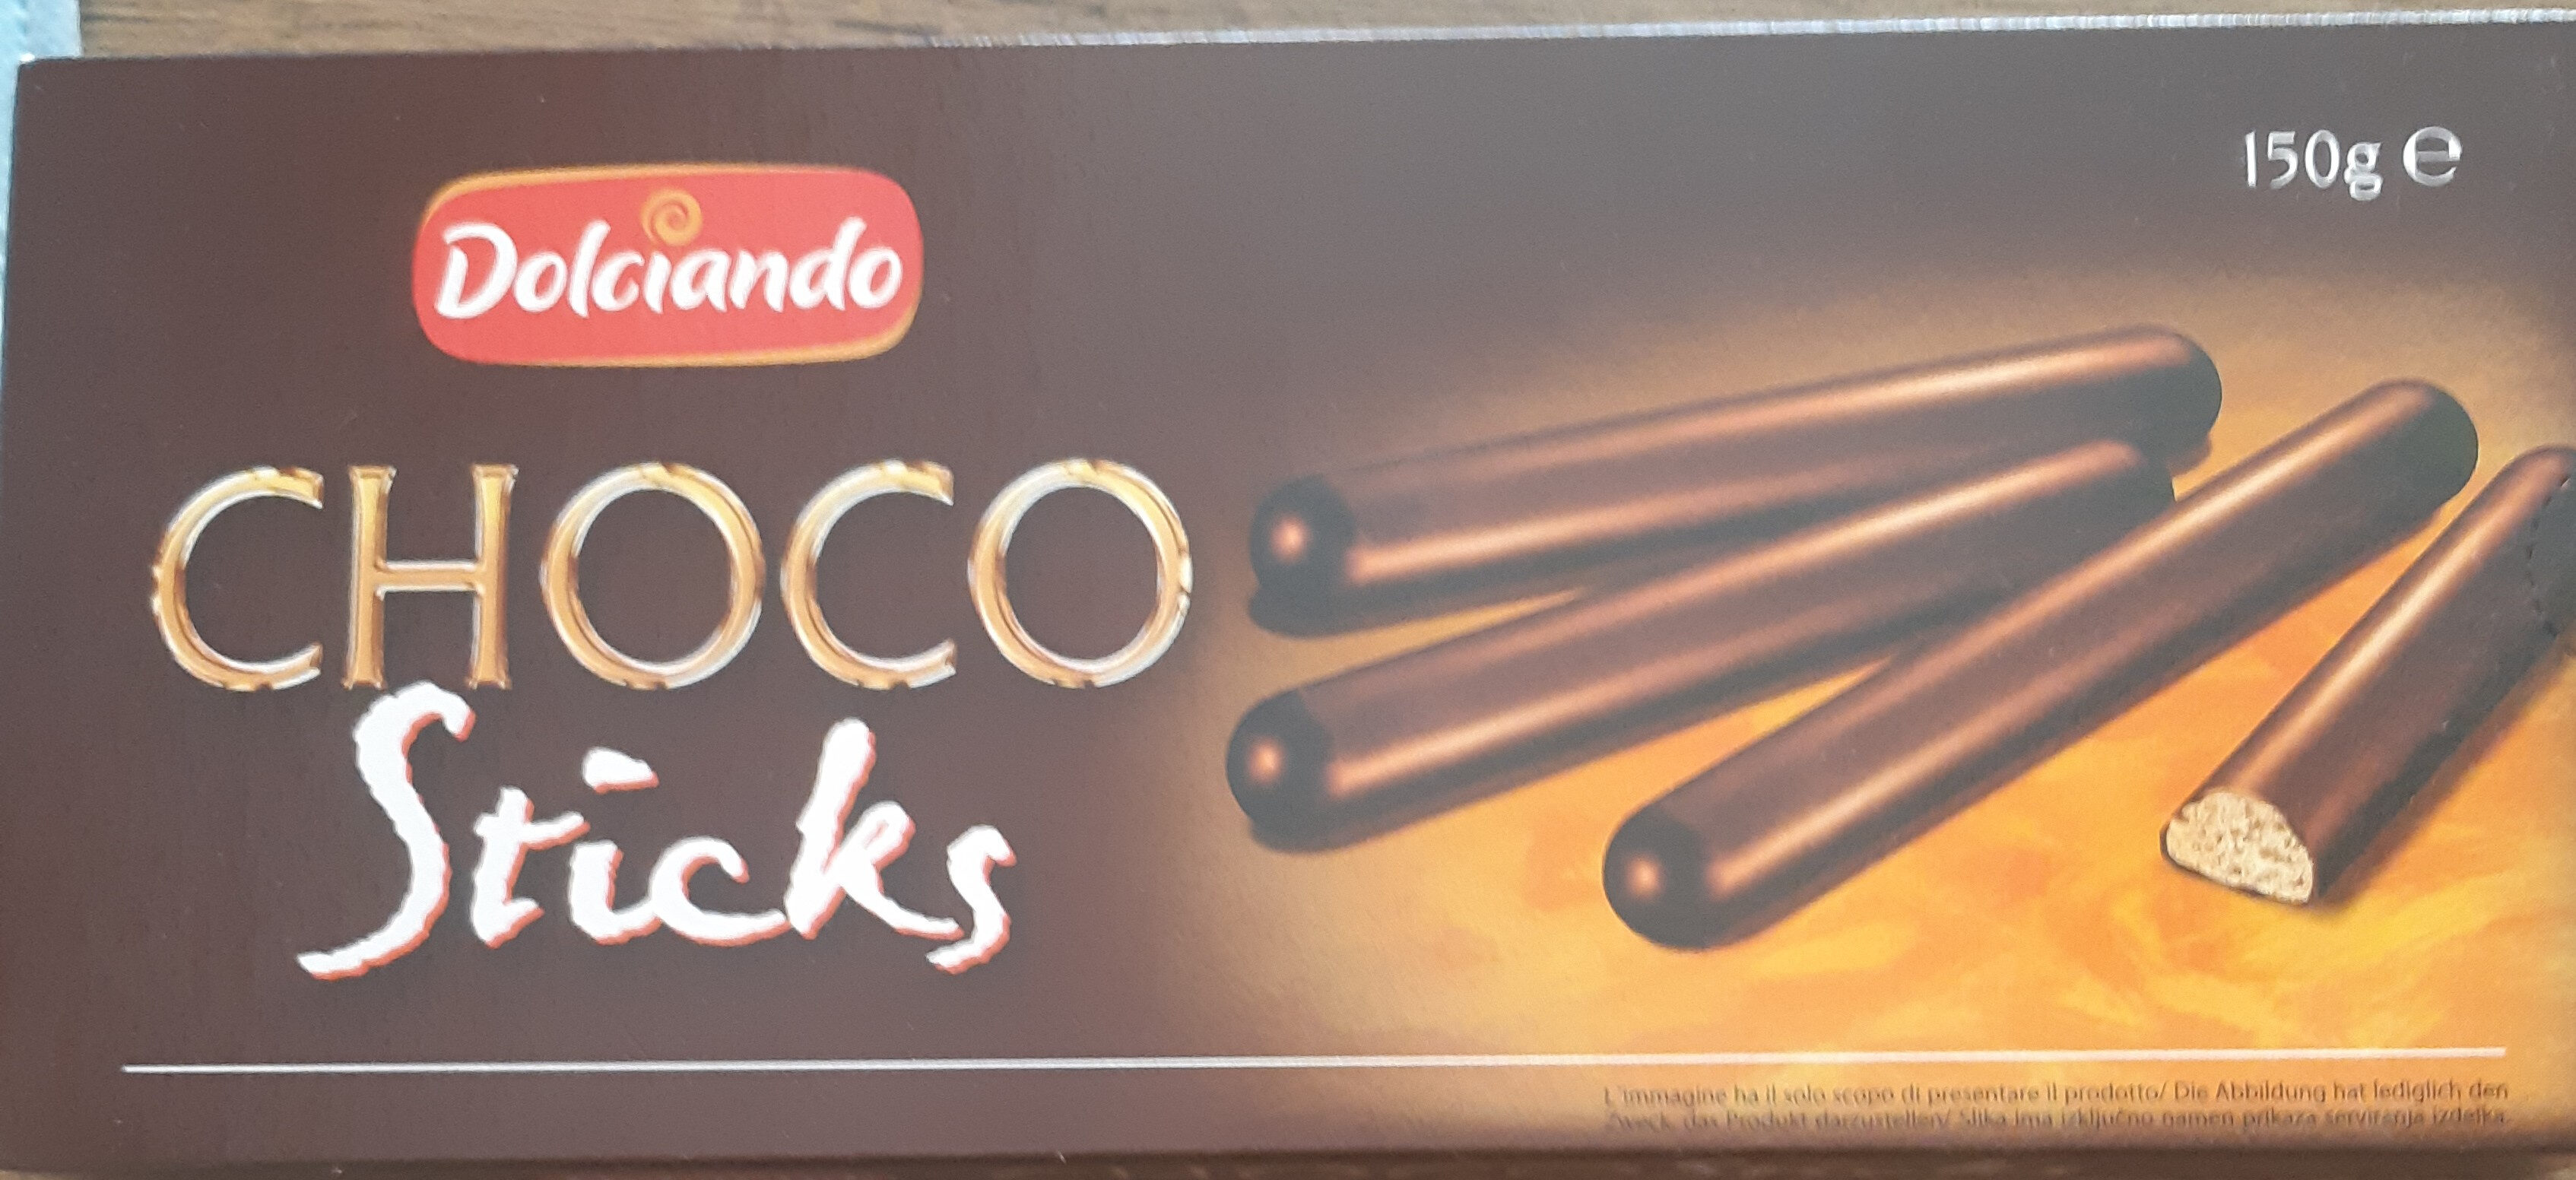 Chocko sticks - Product - it